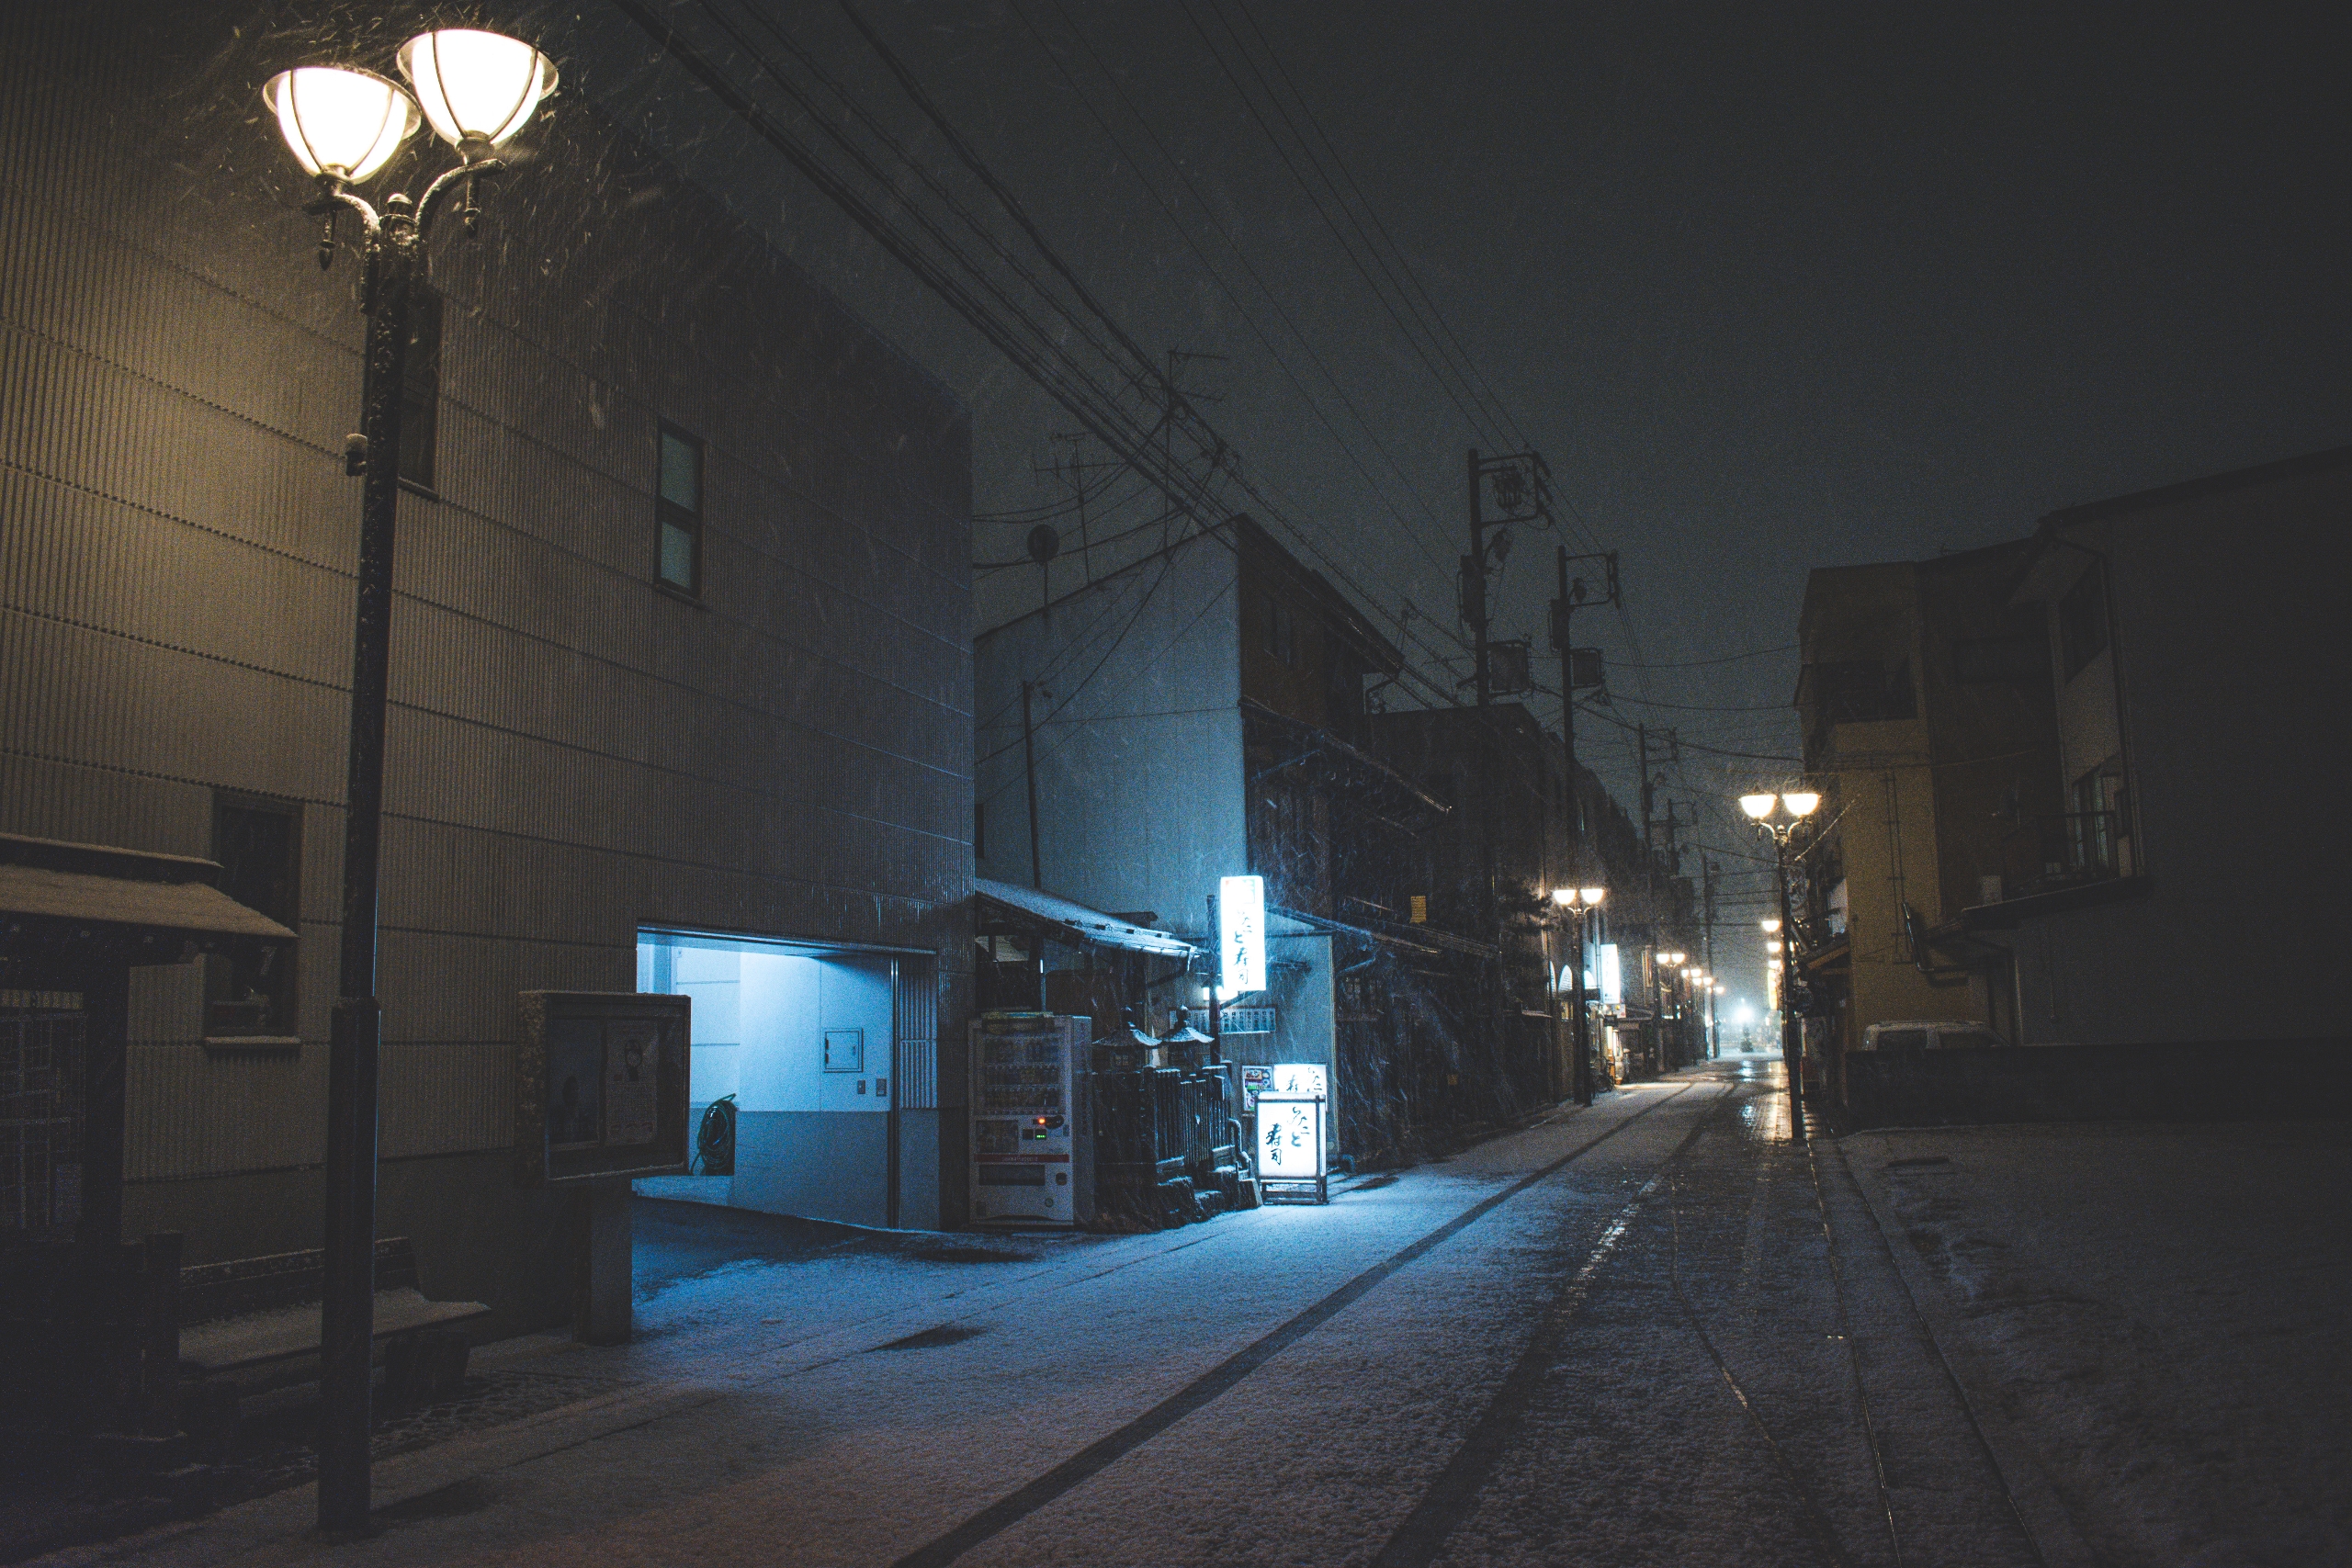 General 2560x1707 Japan cityscape snow urban street night Asia low light winter